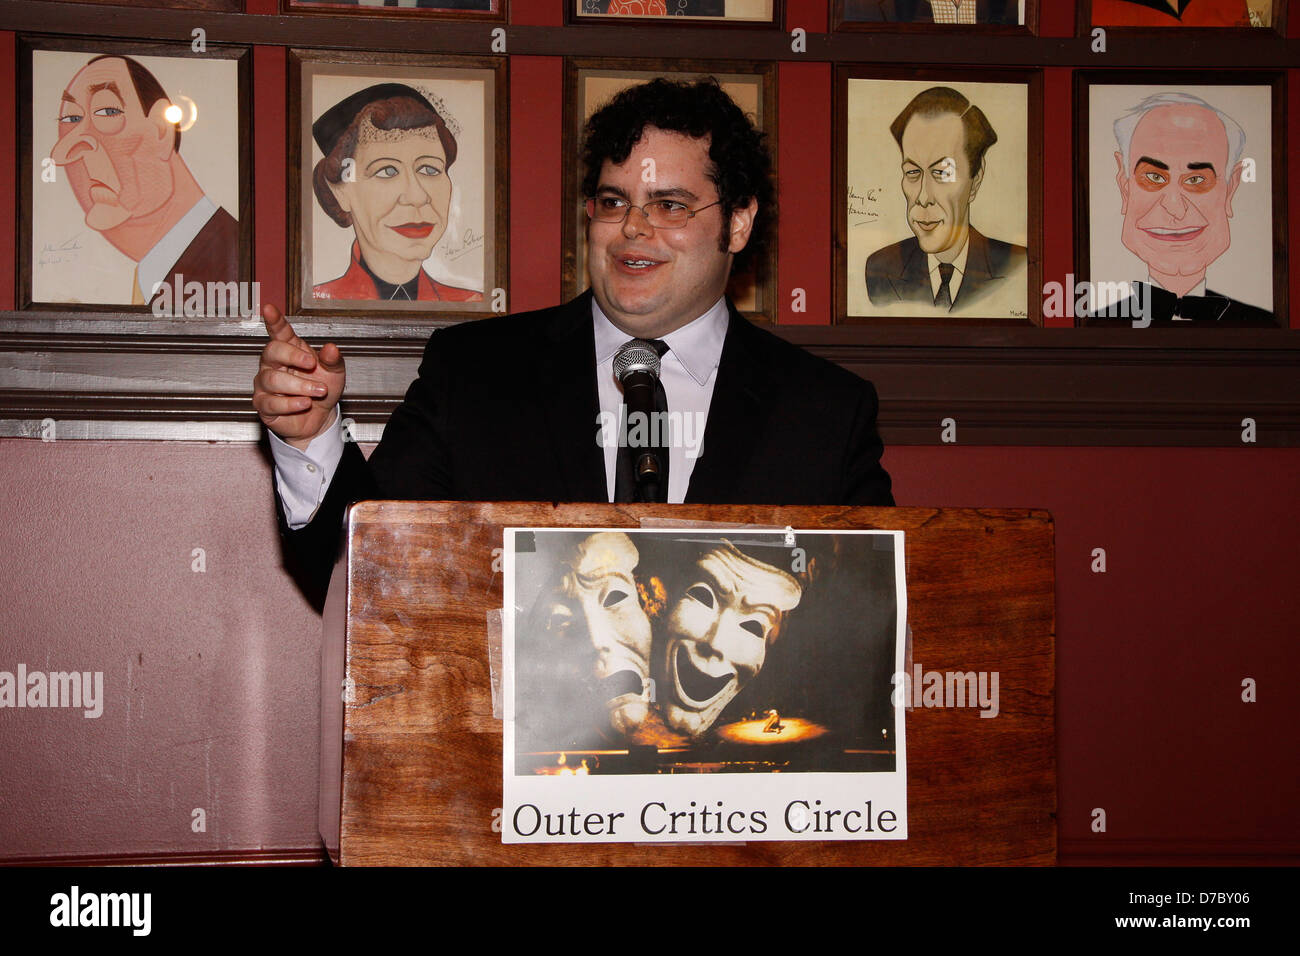 Josh Gad The 61st Annual Outer Critics Circle Theatre Awards held at Sardi's Restaurant - Inside New York City, USA - 26.05.11 Stock Photo